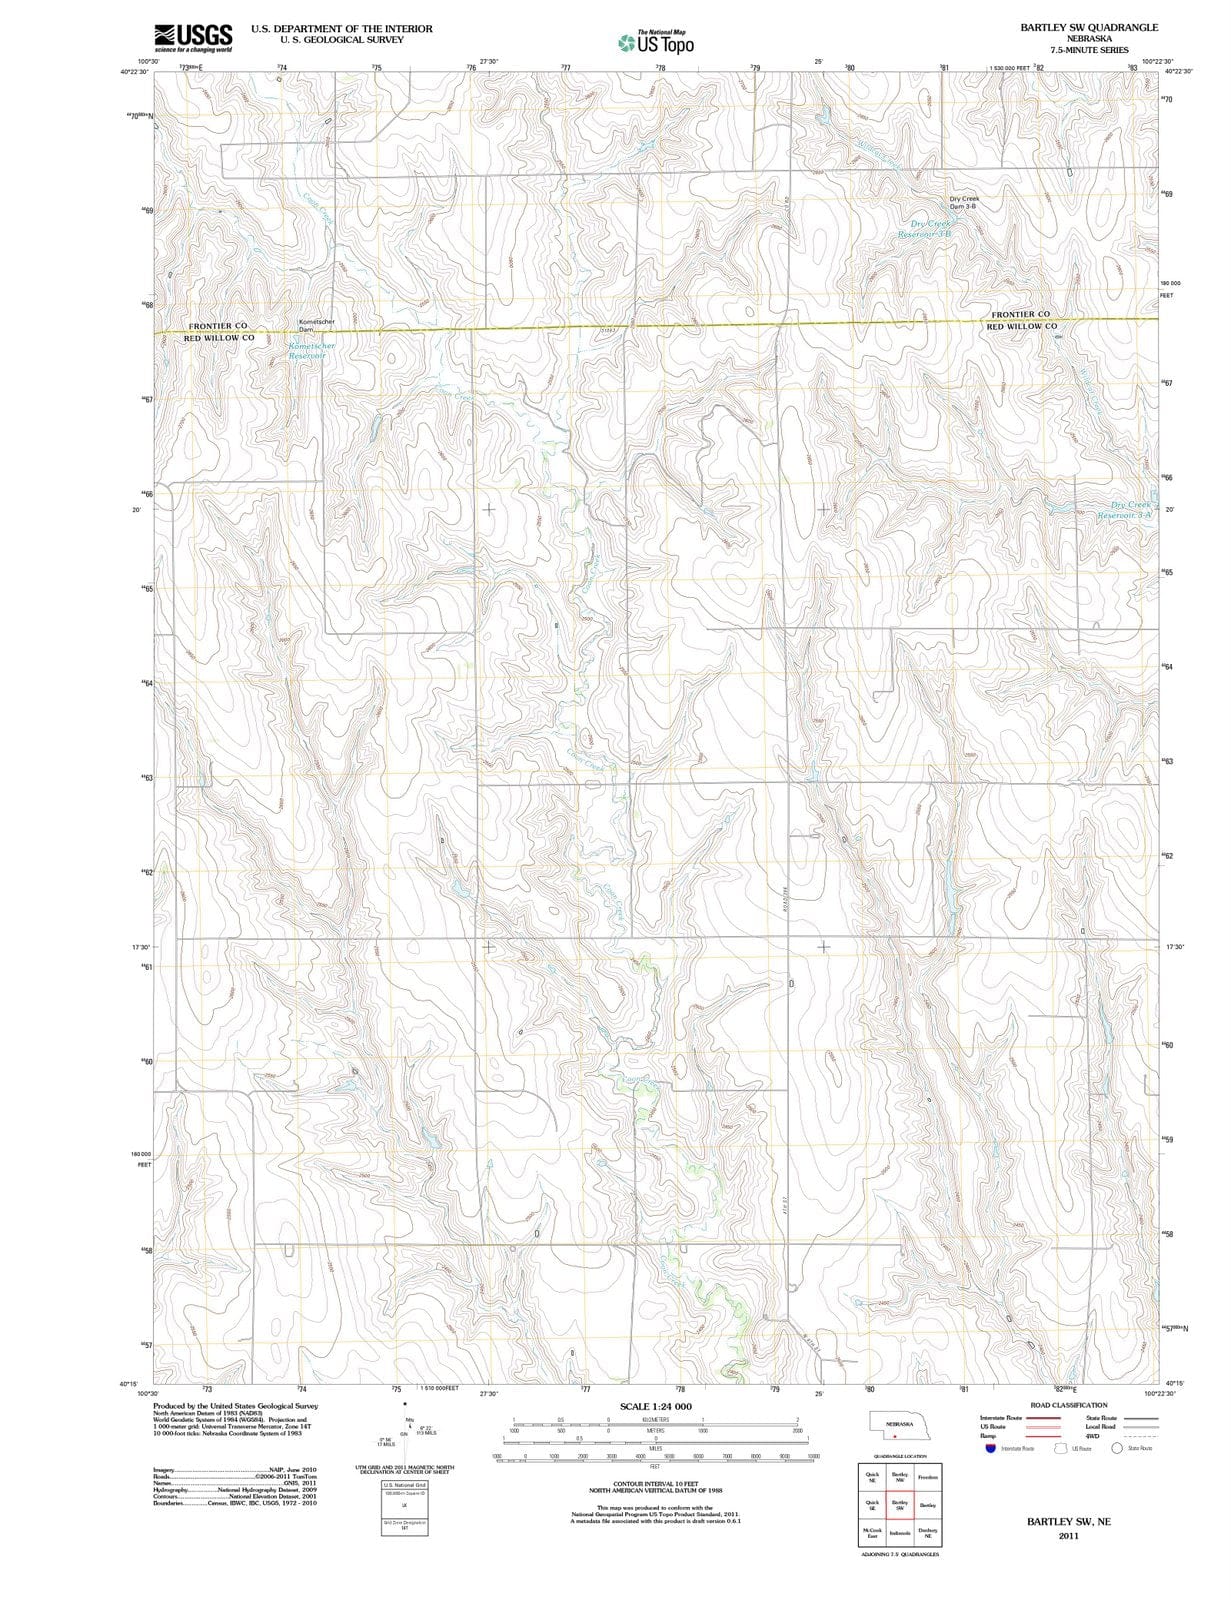 2011 Bartley, NE - Nebraska - USGS Topographic Map v2